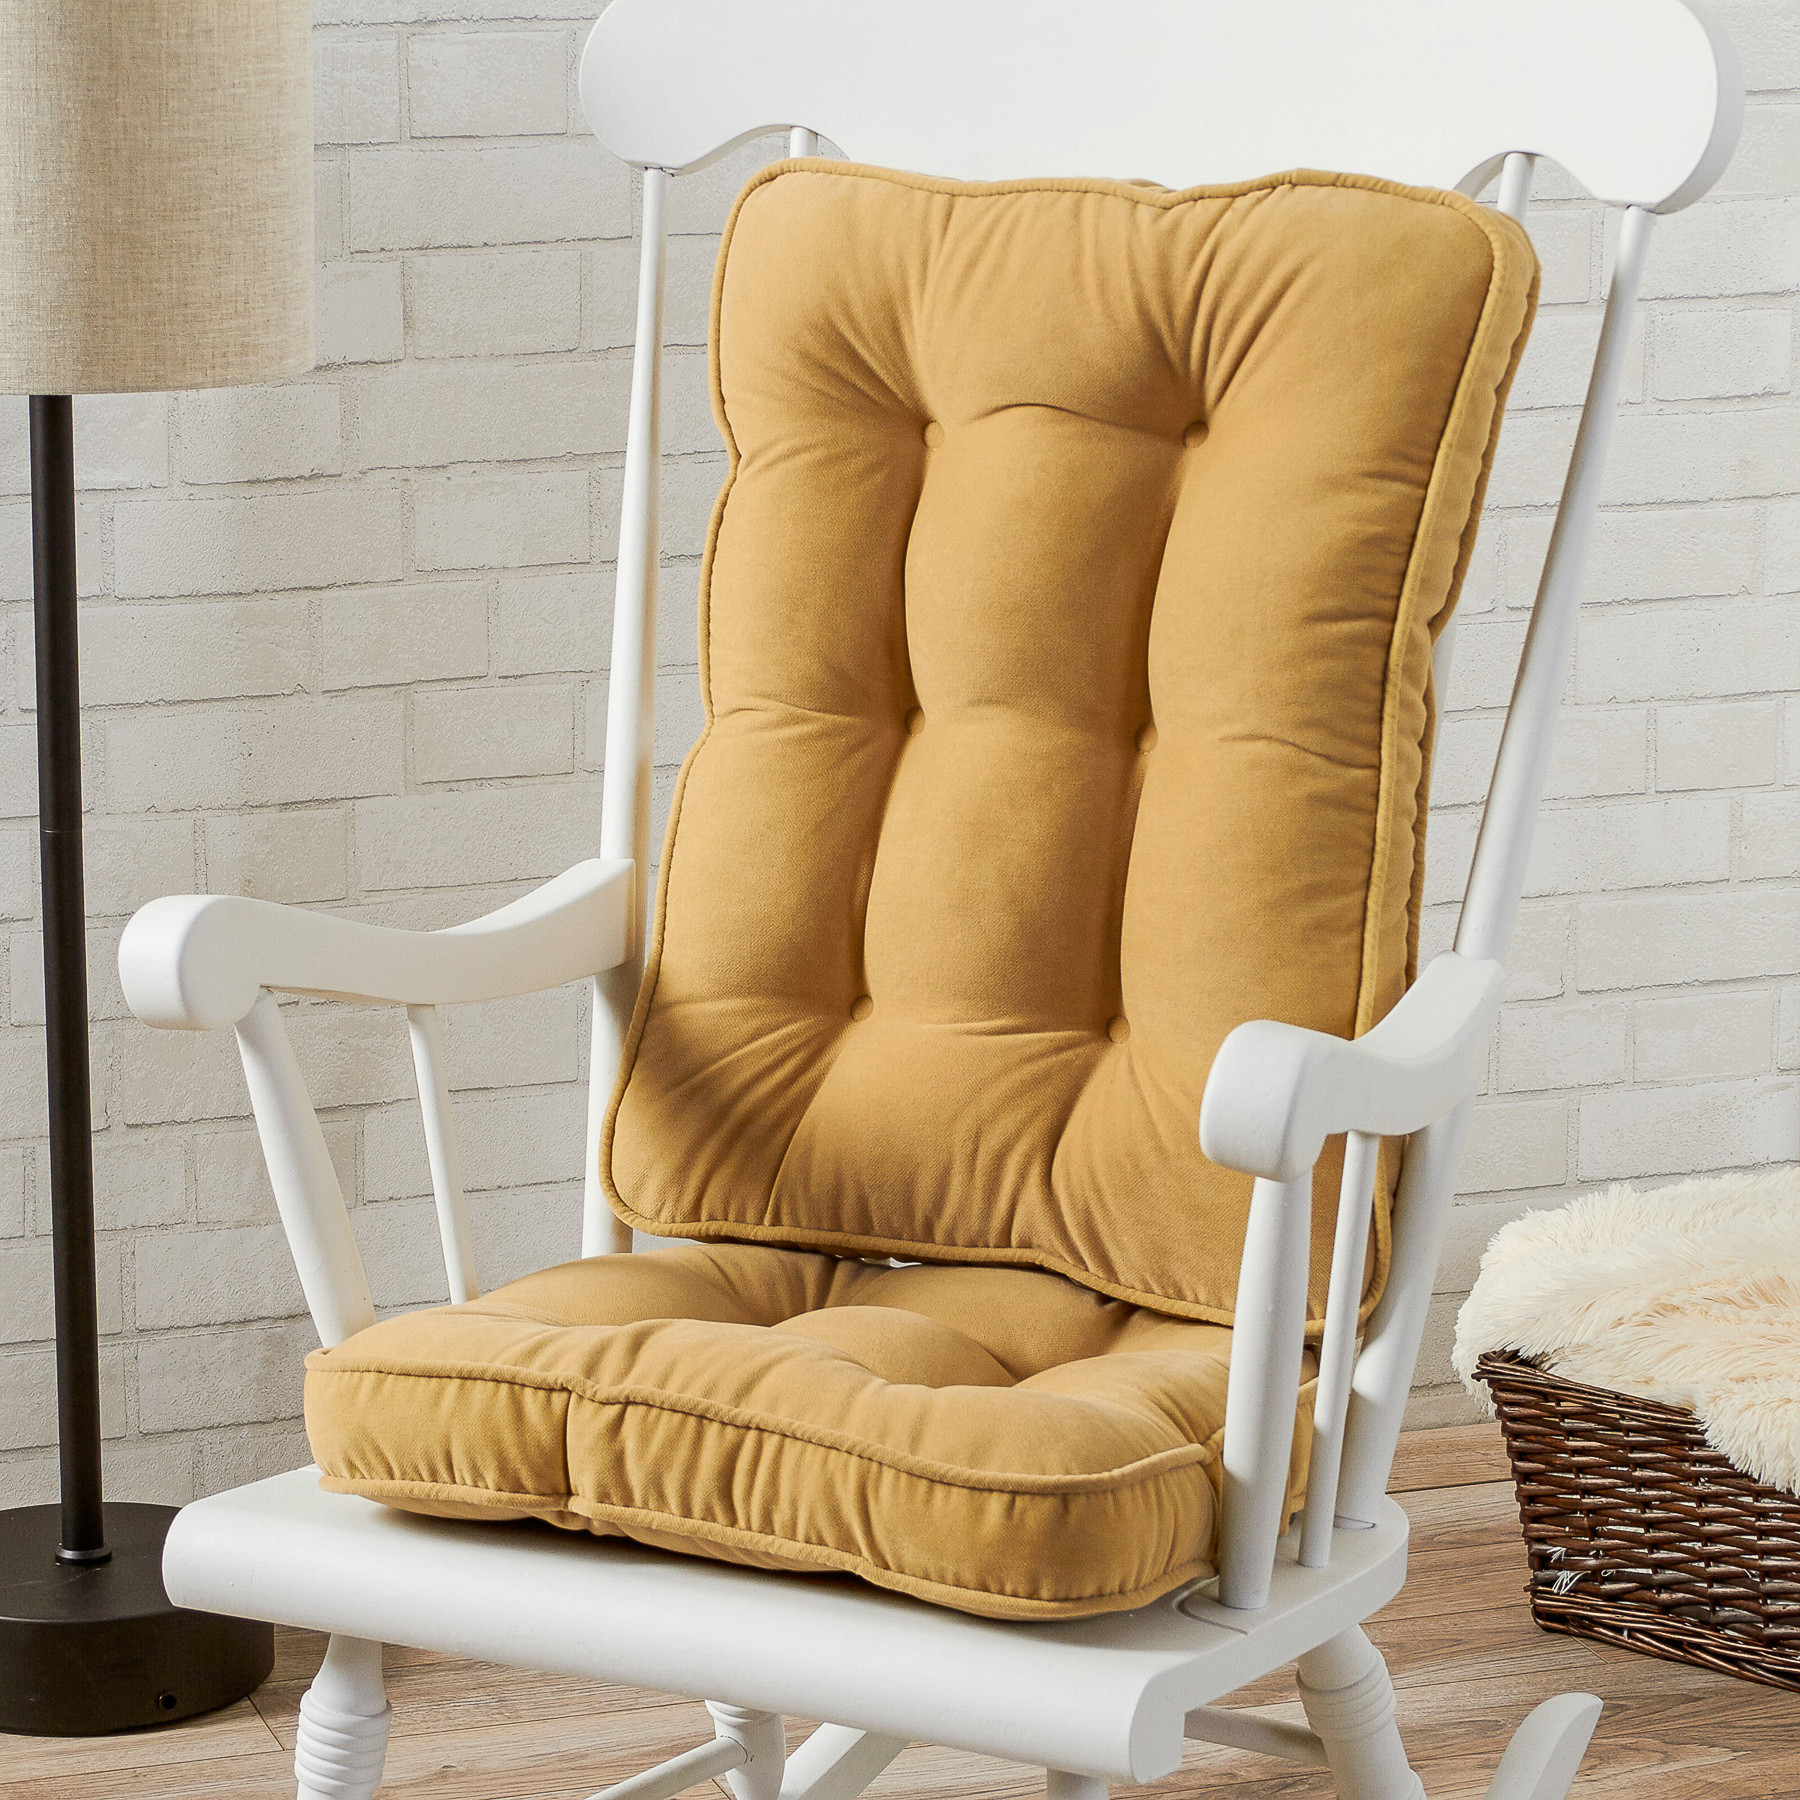 Boho Rocking Chair Cushions - Photos & Ideas | Houzz